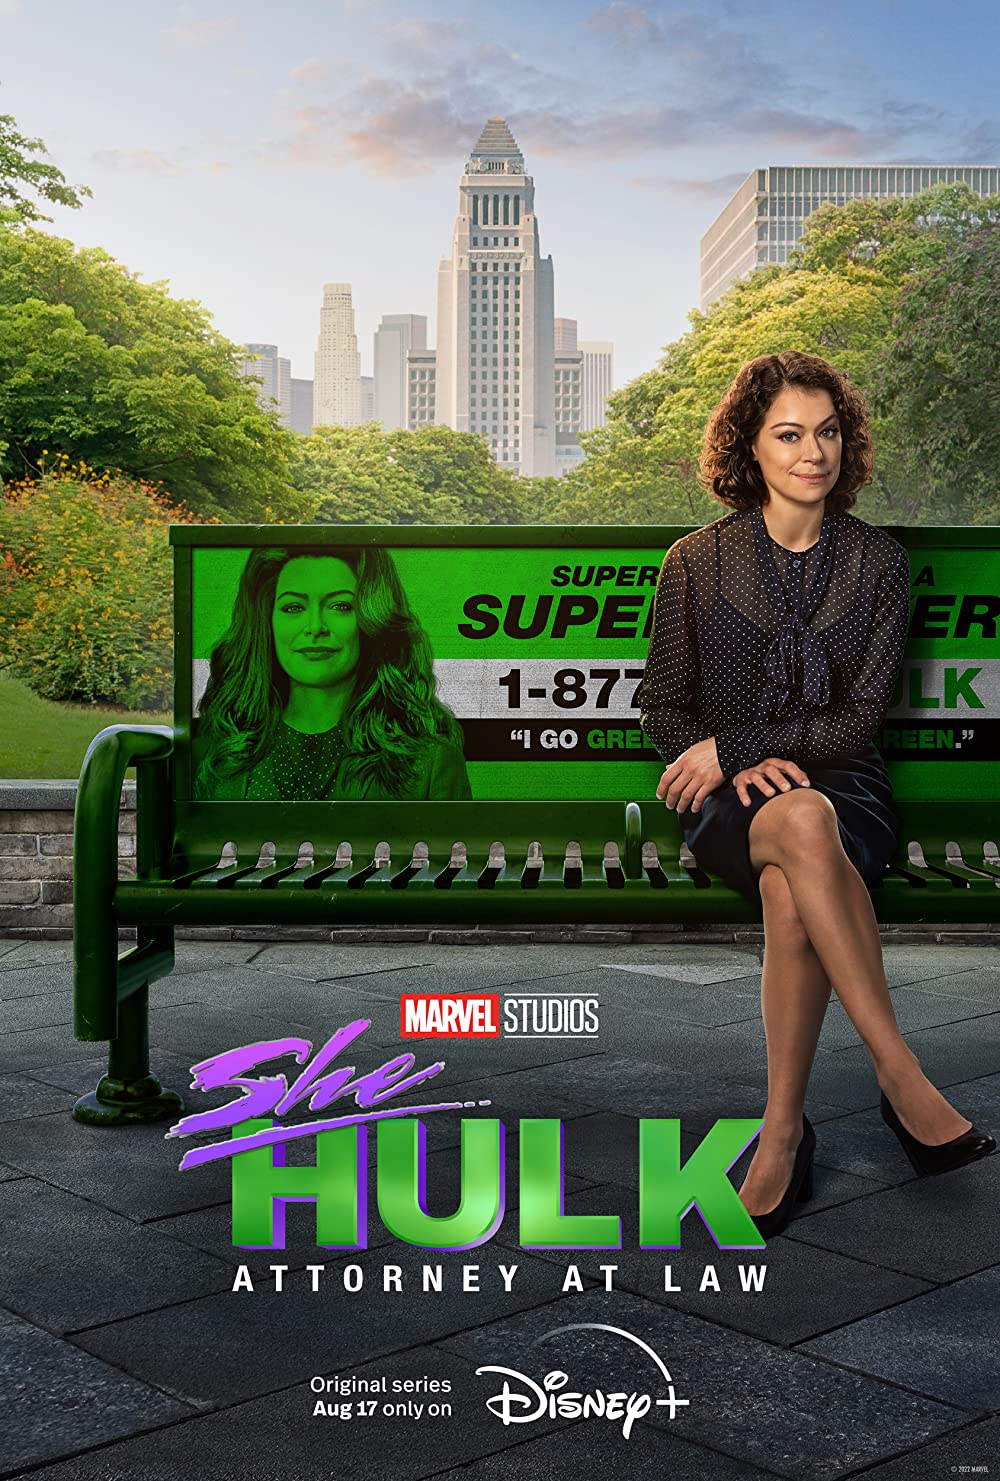 She-Hulk: Neuveritelna pravnicka / She-Hulk: Attorney at Law S01E07 (CZ/SK/EN)[WebRip][1080p] = CSFD 50%